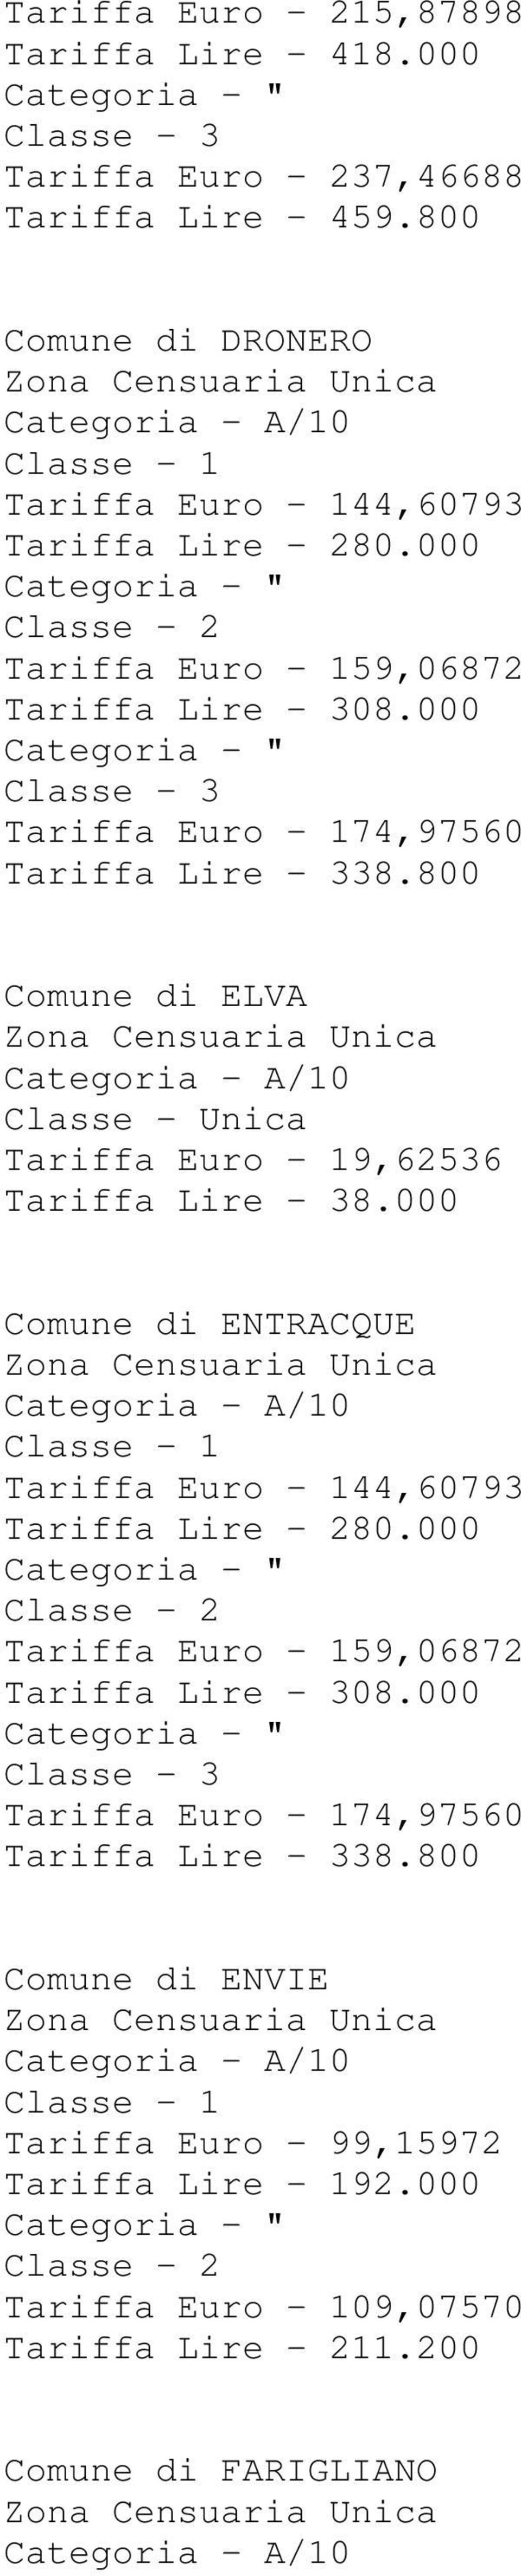 000 Tariffa Euro - 174,97560 Tariffa Lire - 338.800 Comune di ELVA Tariffa Euro - 19,62536 Tariffa Lire - 38.